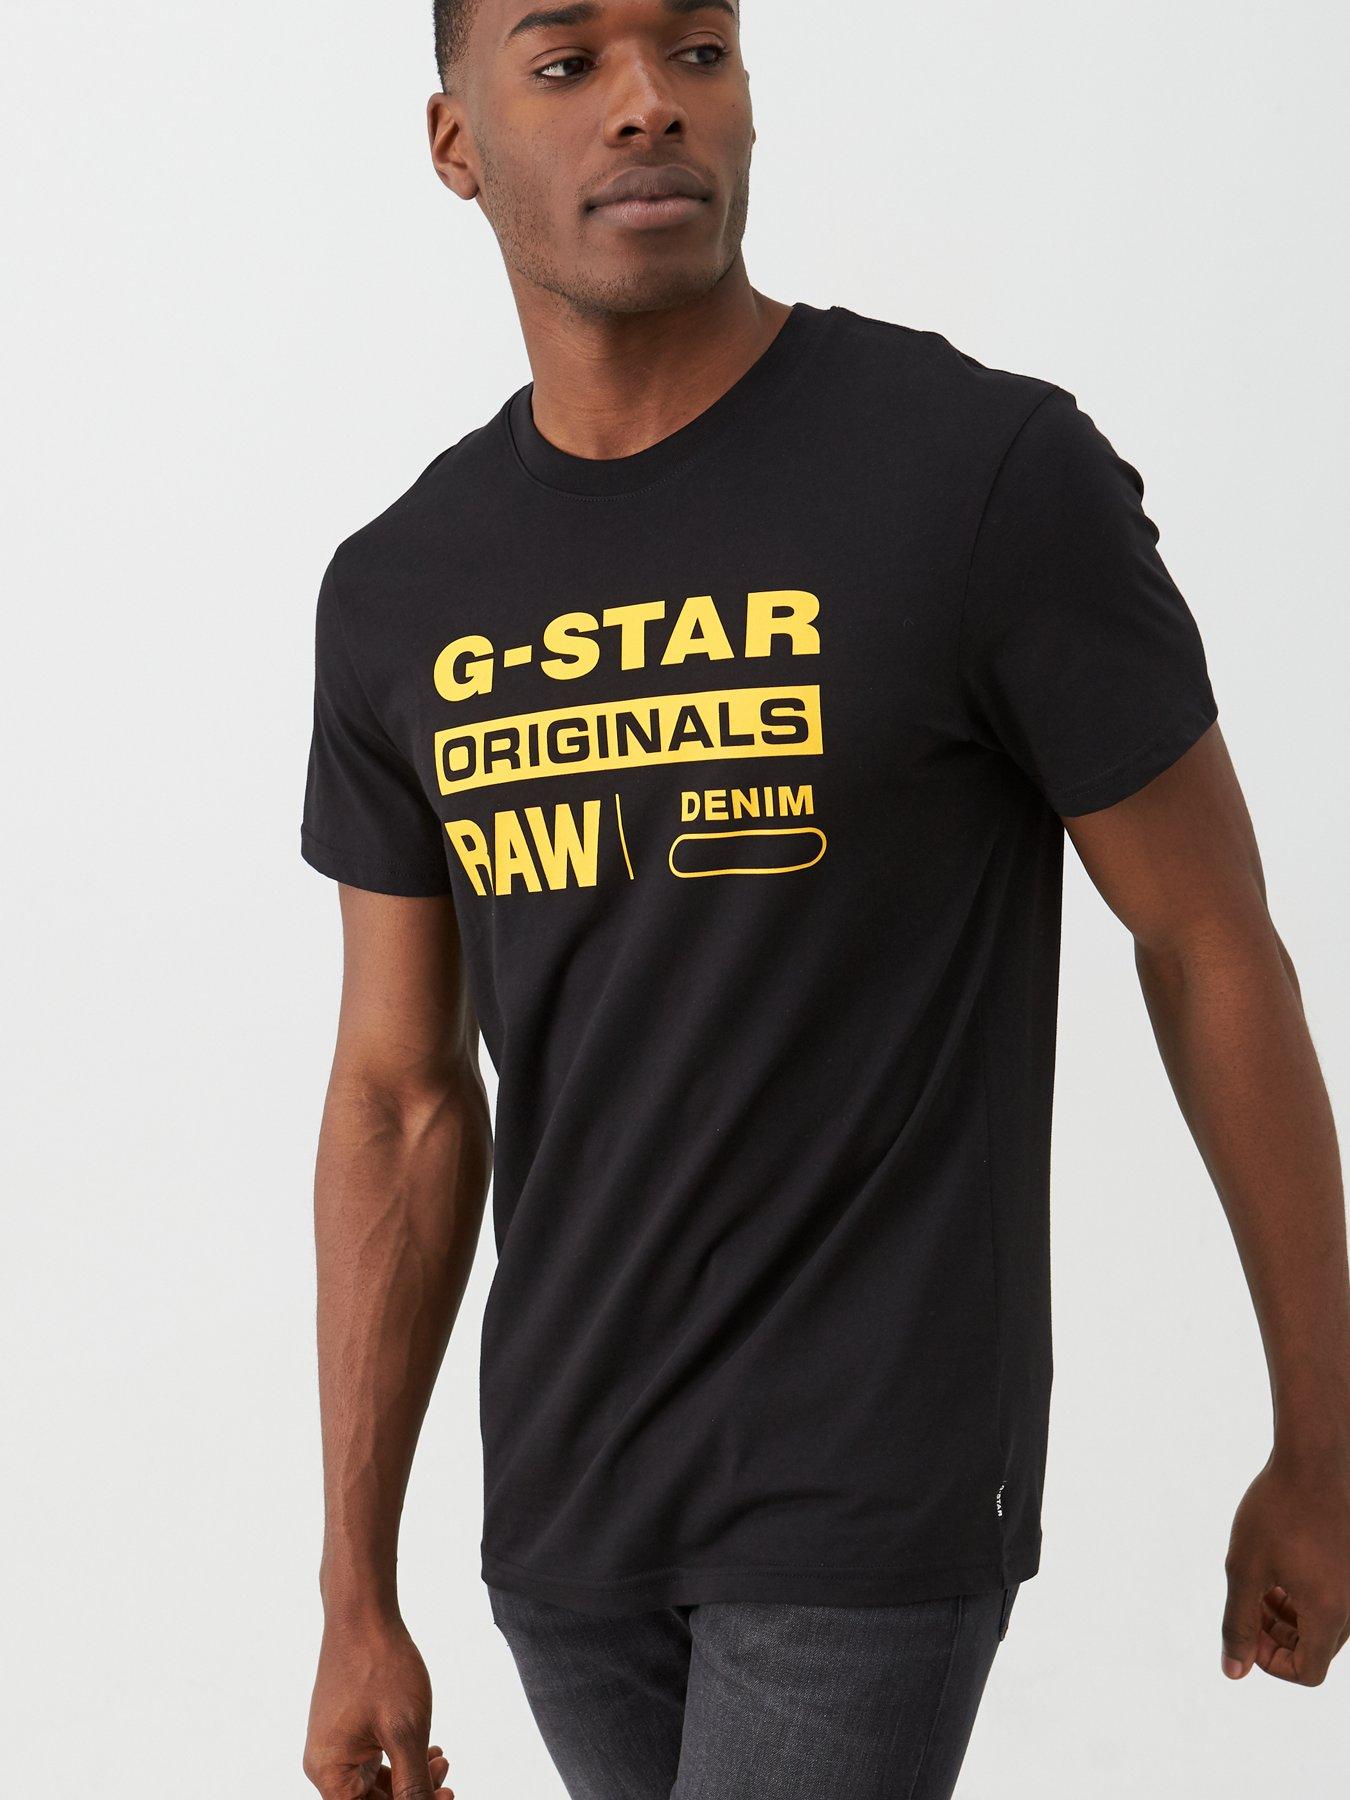 g star raw black shirt